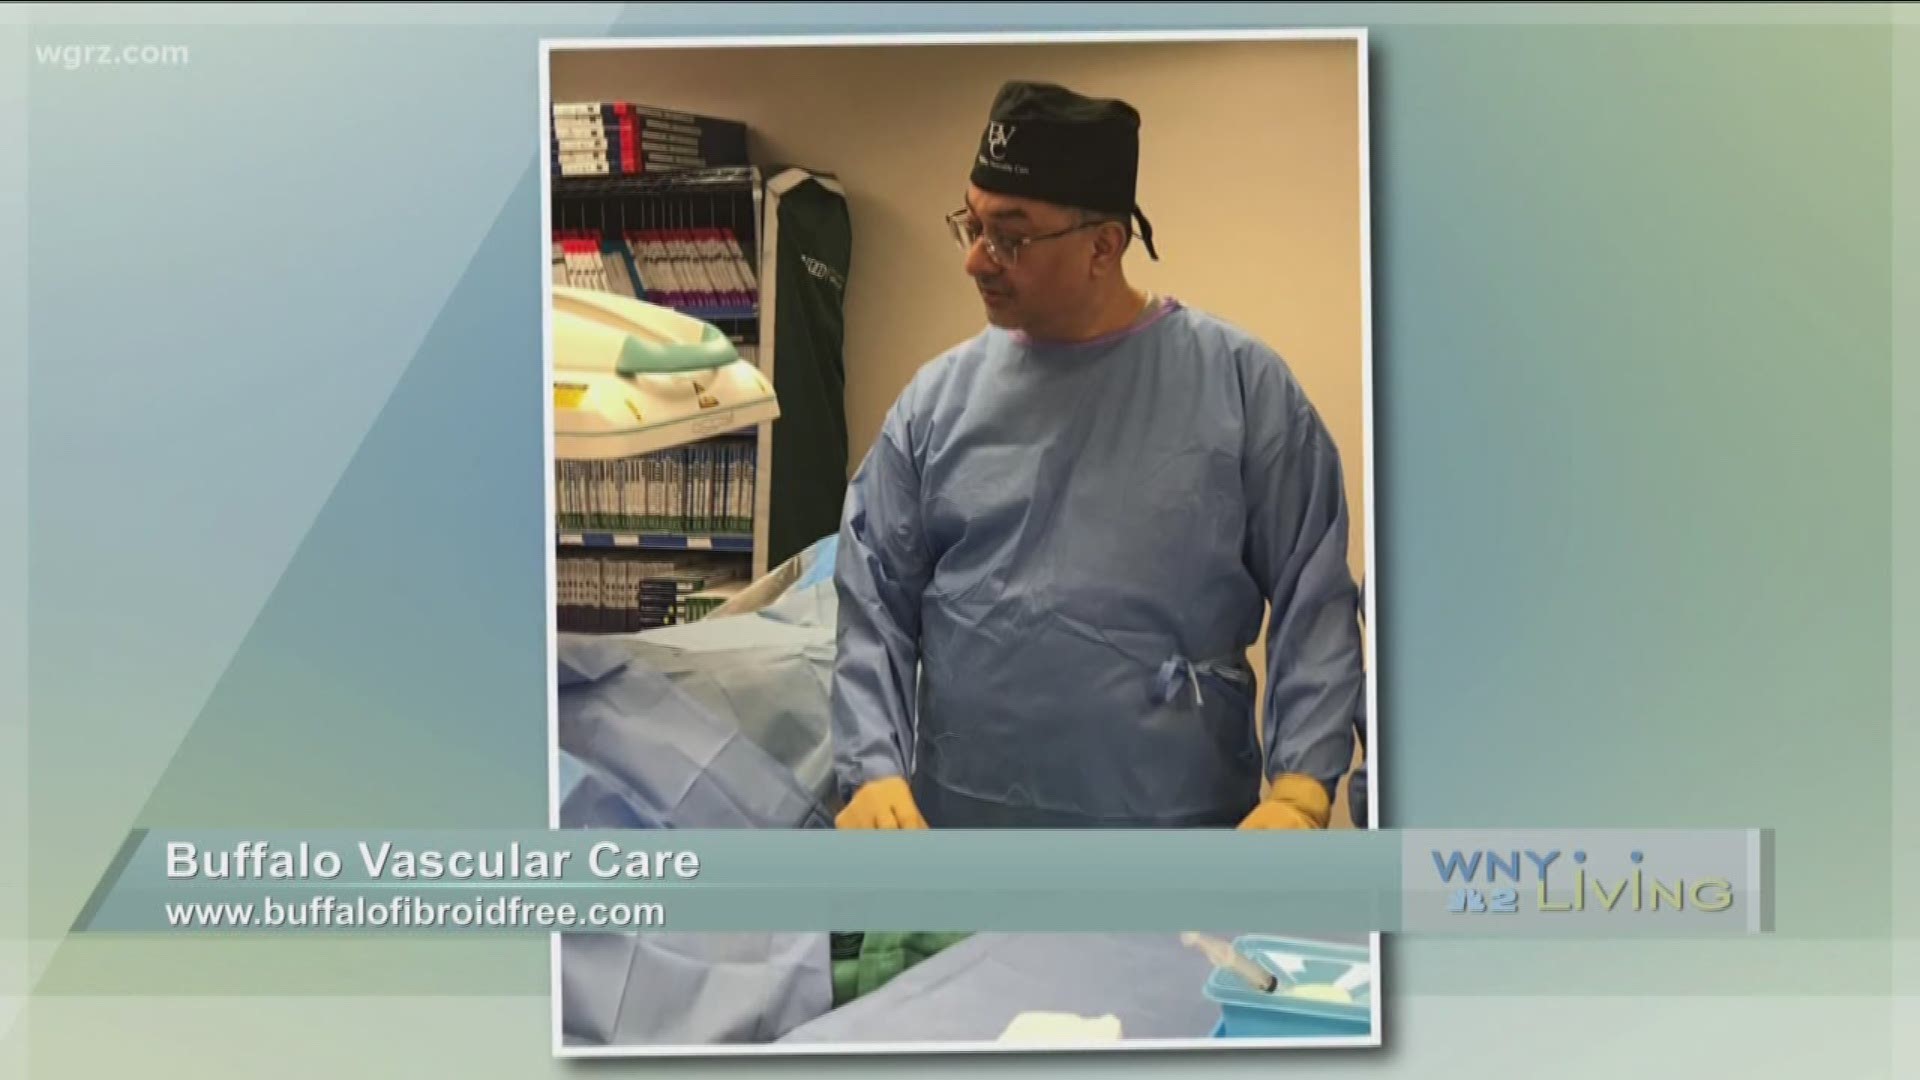 WNY Living - June 30 - Buffalo Vascular Care